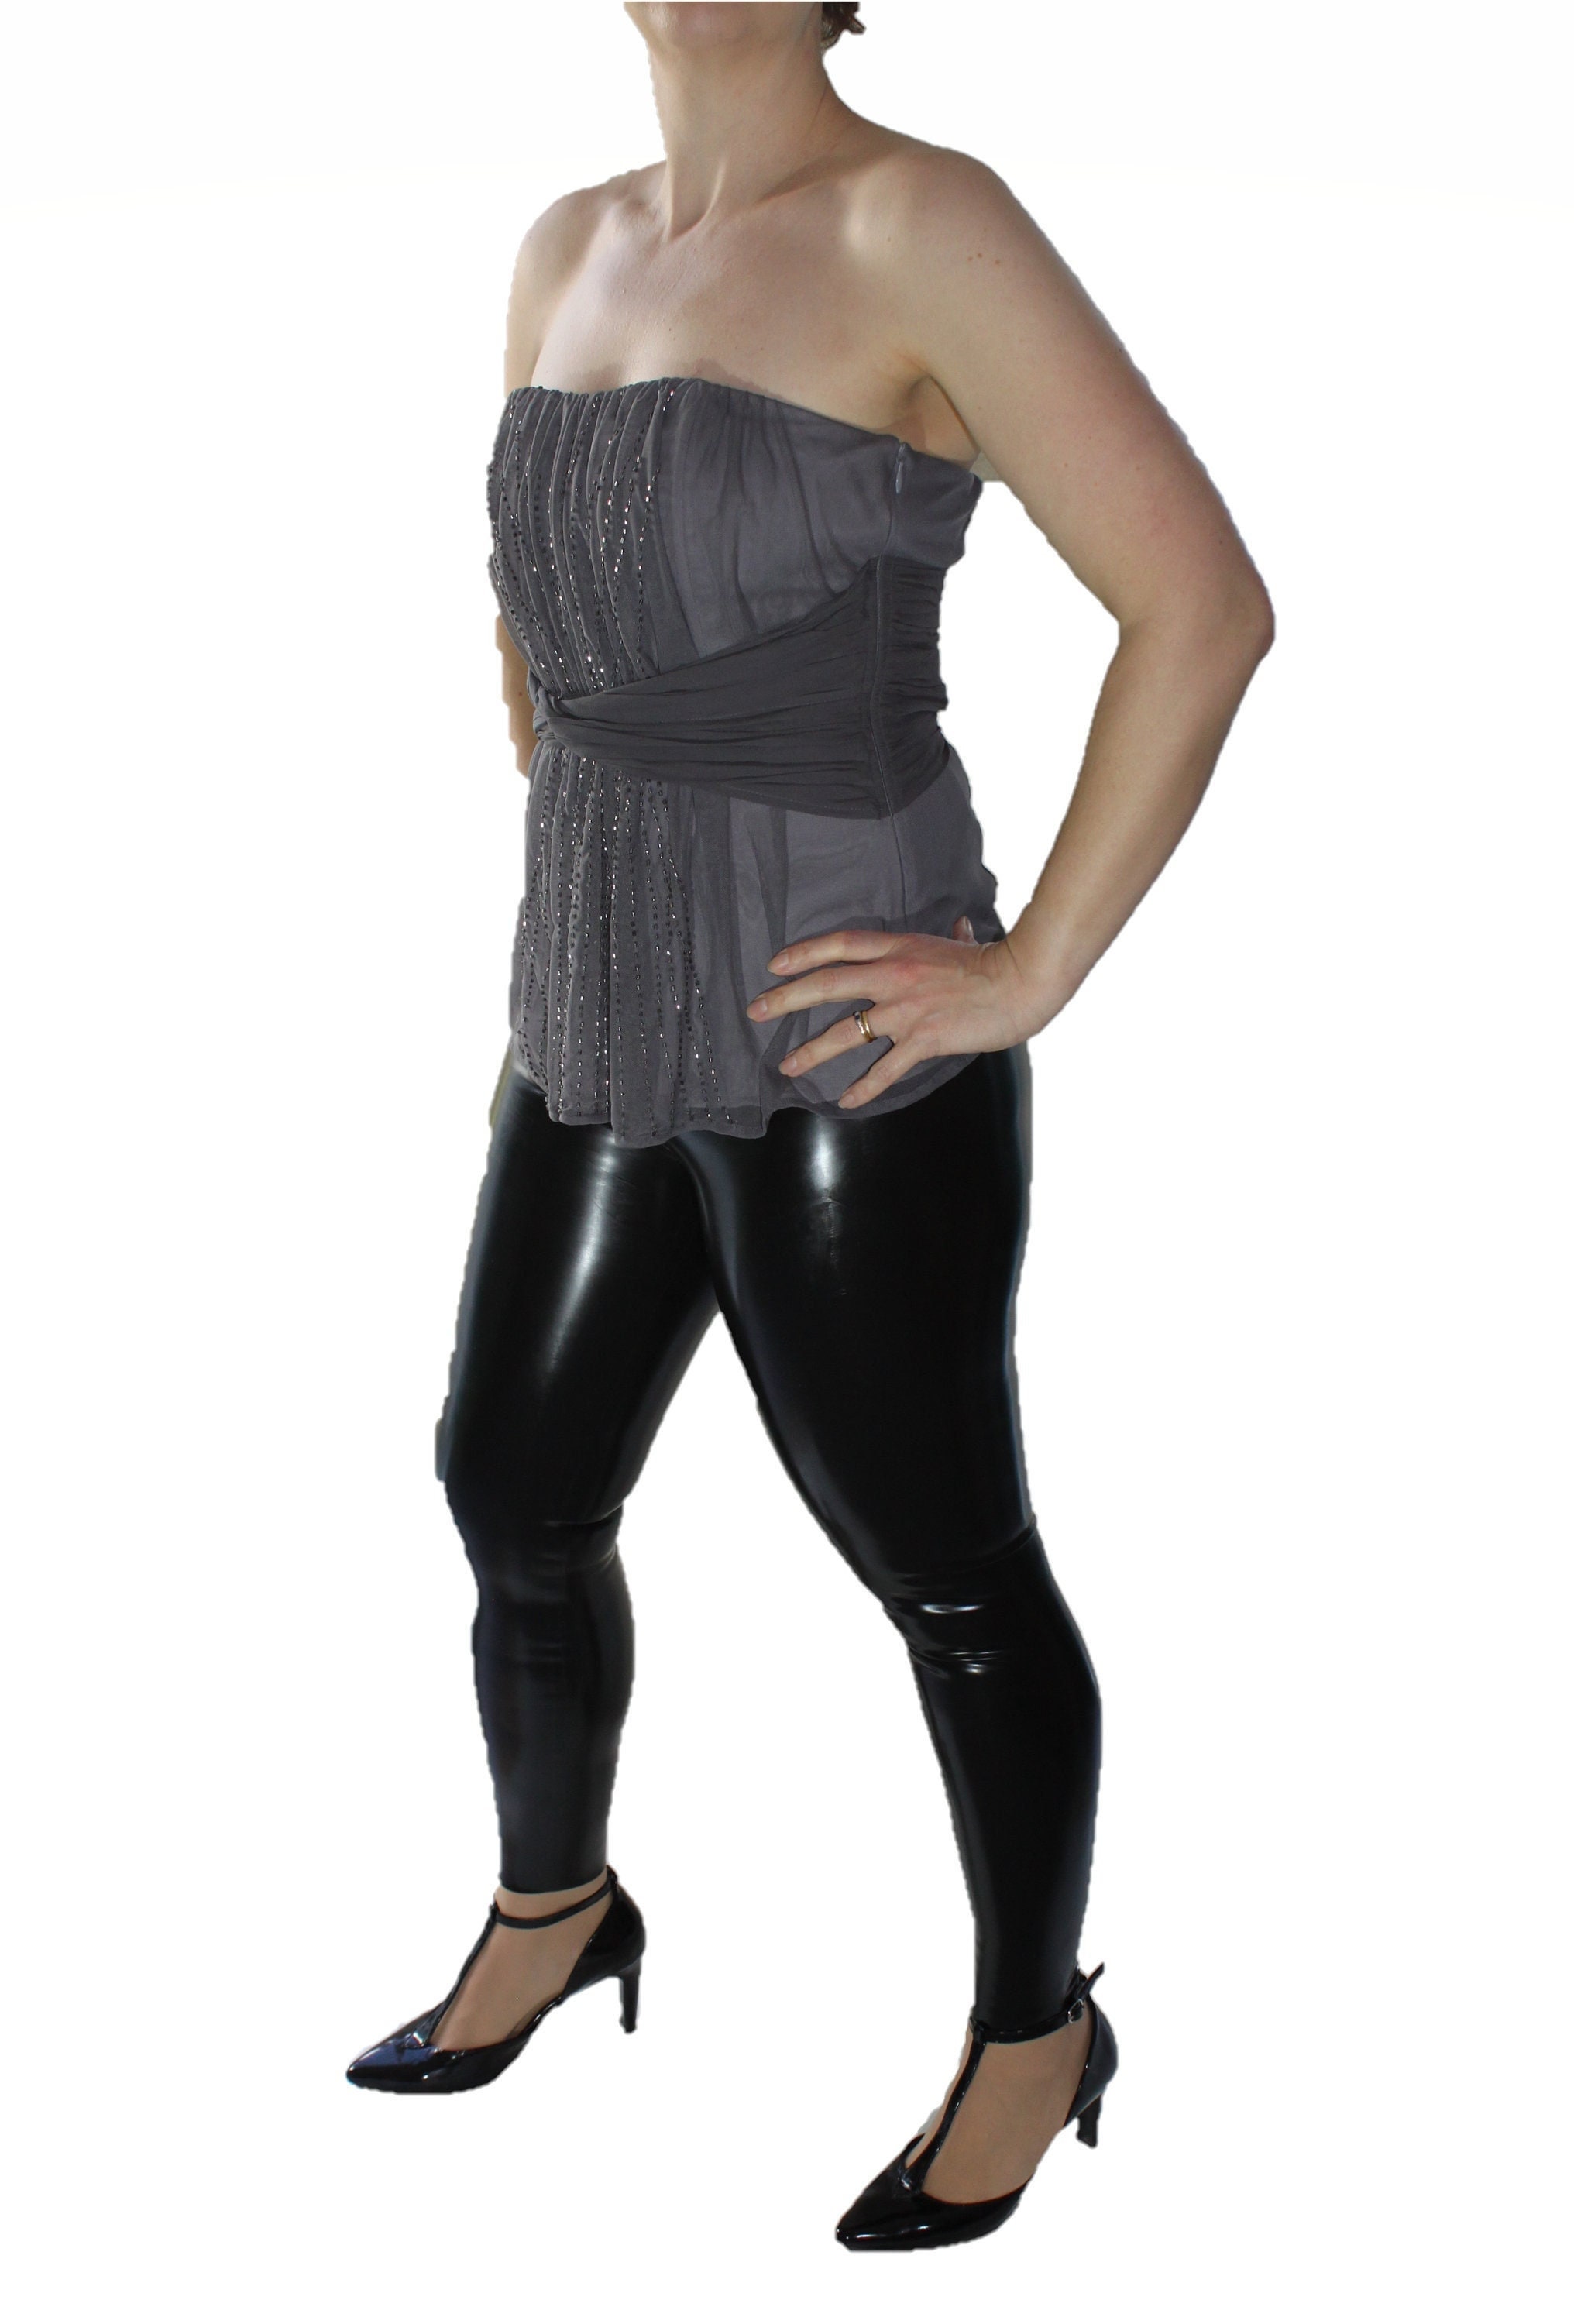 CASPAR HLE023 High Waisted Women Thermal Winter Leggings / Black Jeggings  Wet Look Faux Leather Design